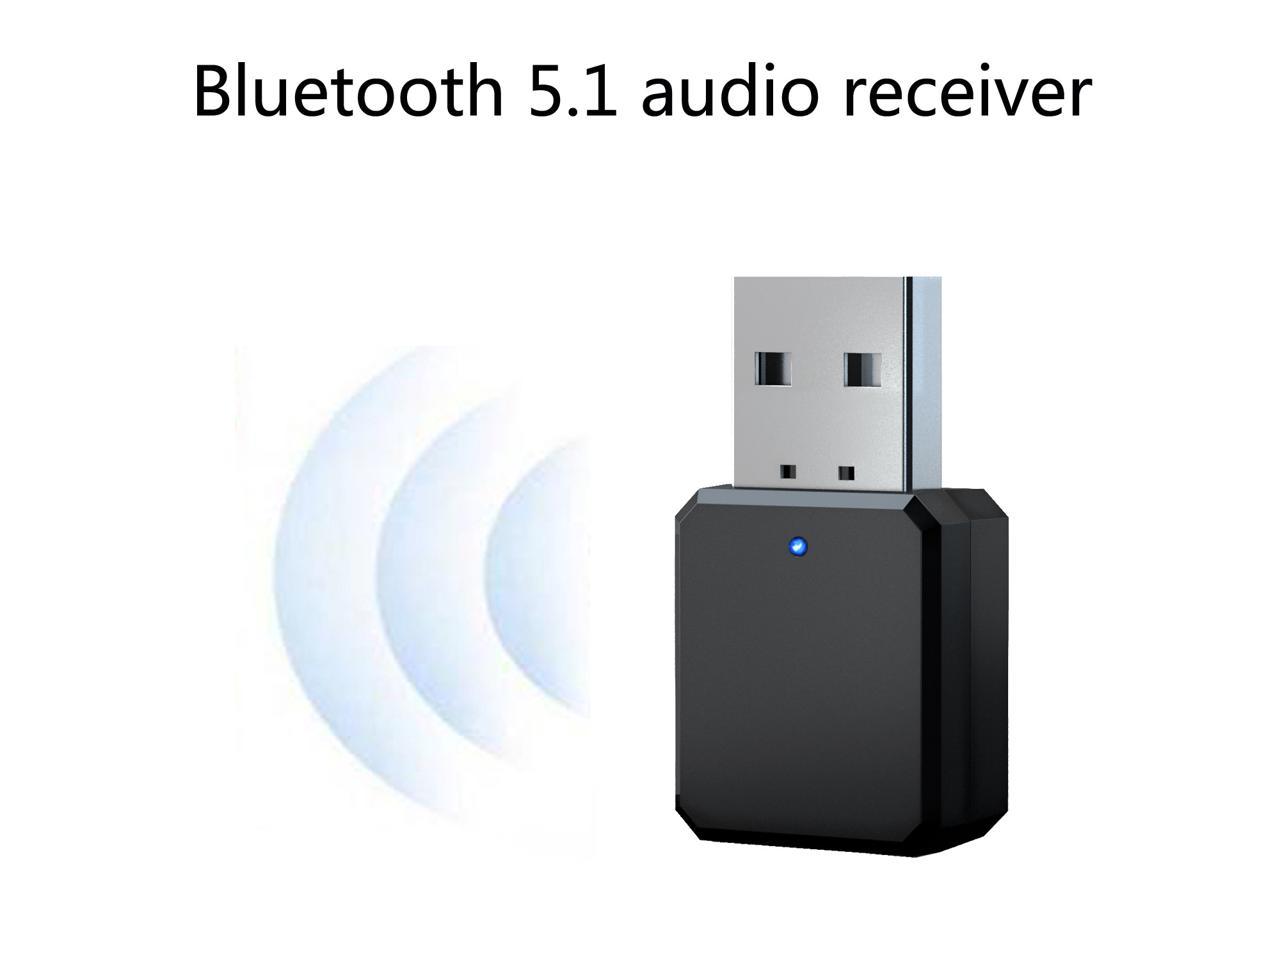 Bluetooth Stick für PC Kopfhörer Headset unterstützt Windows 10/8/7 Lautsprecher Maus Maxuni Bluetooth USB Adapter Dongle 5.1 Desktop Laptop Tastatur